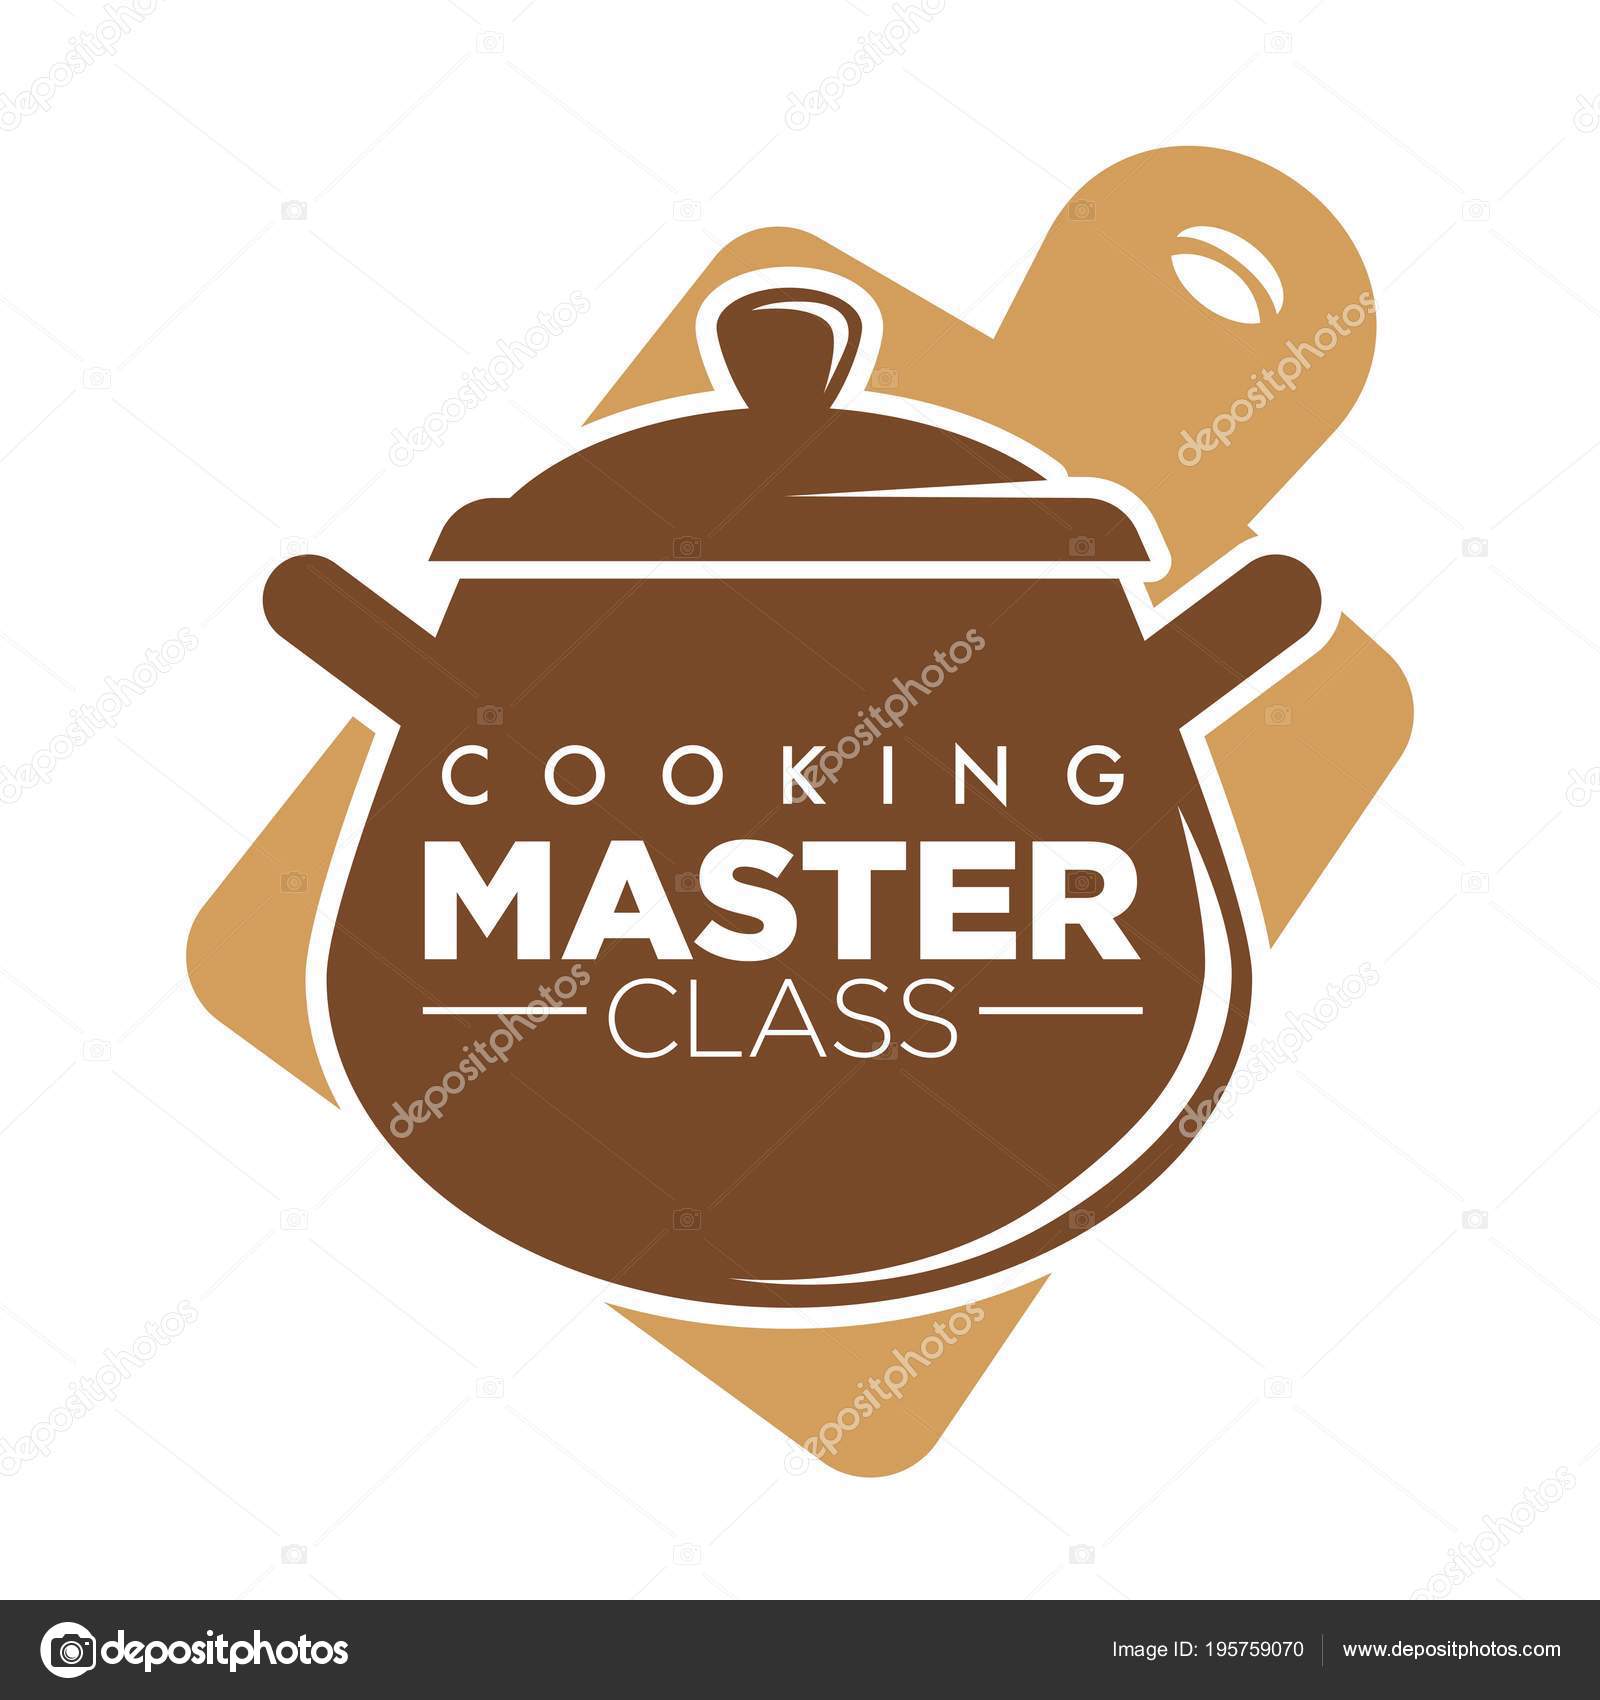 https://st3.depositphotos.com/1028367/19575/v/1600/depositphotos_195759070-stock-illustration-cooking-master-class-emblem-big.jpg